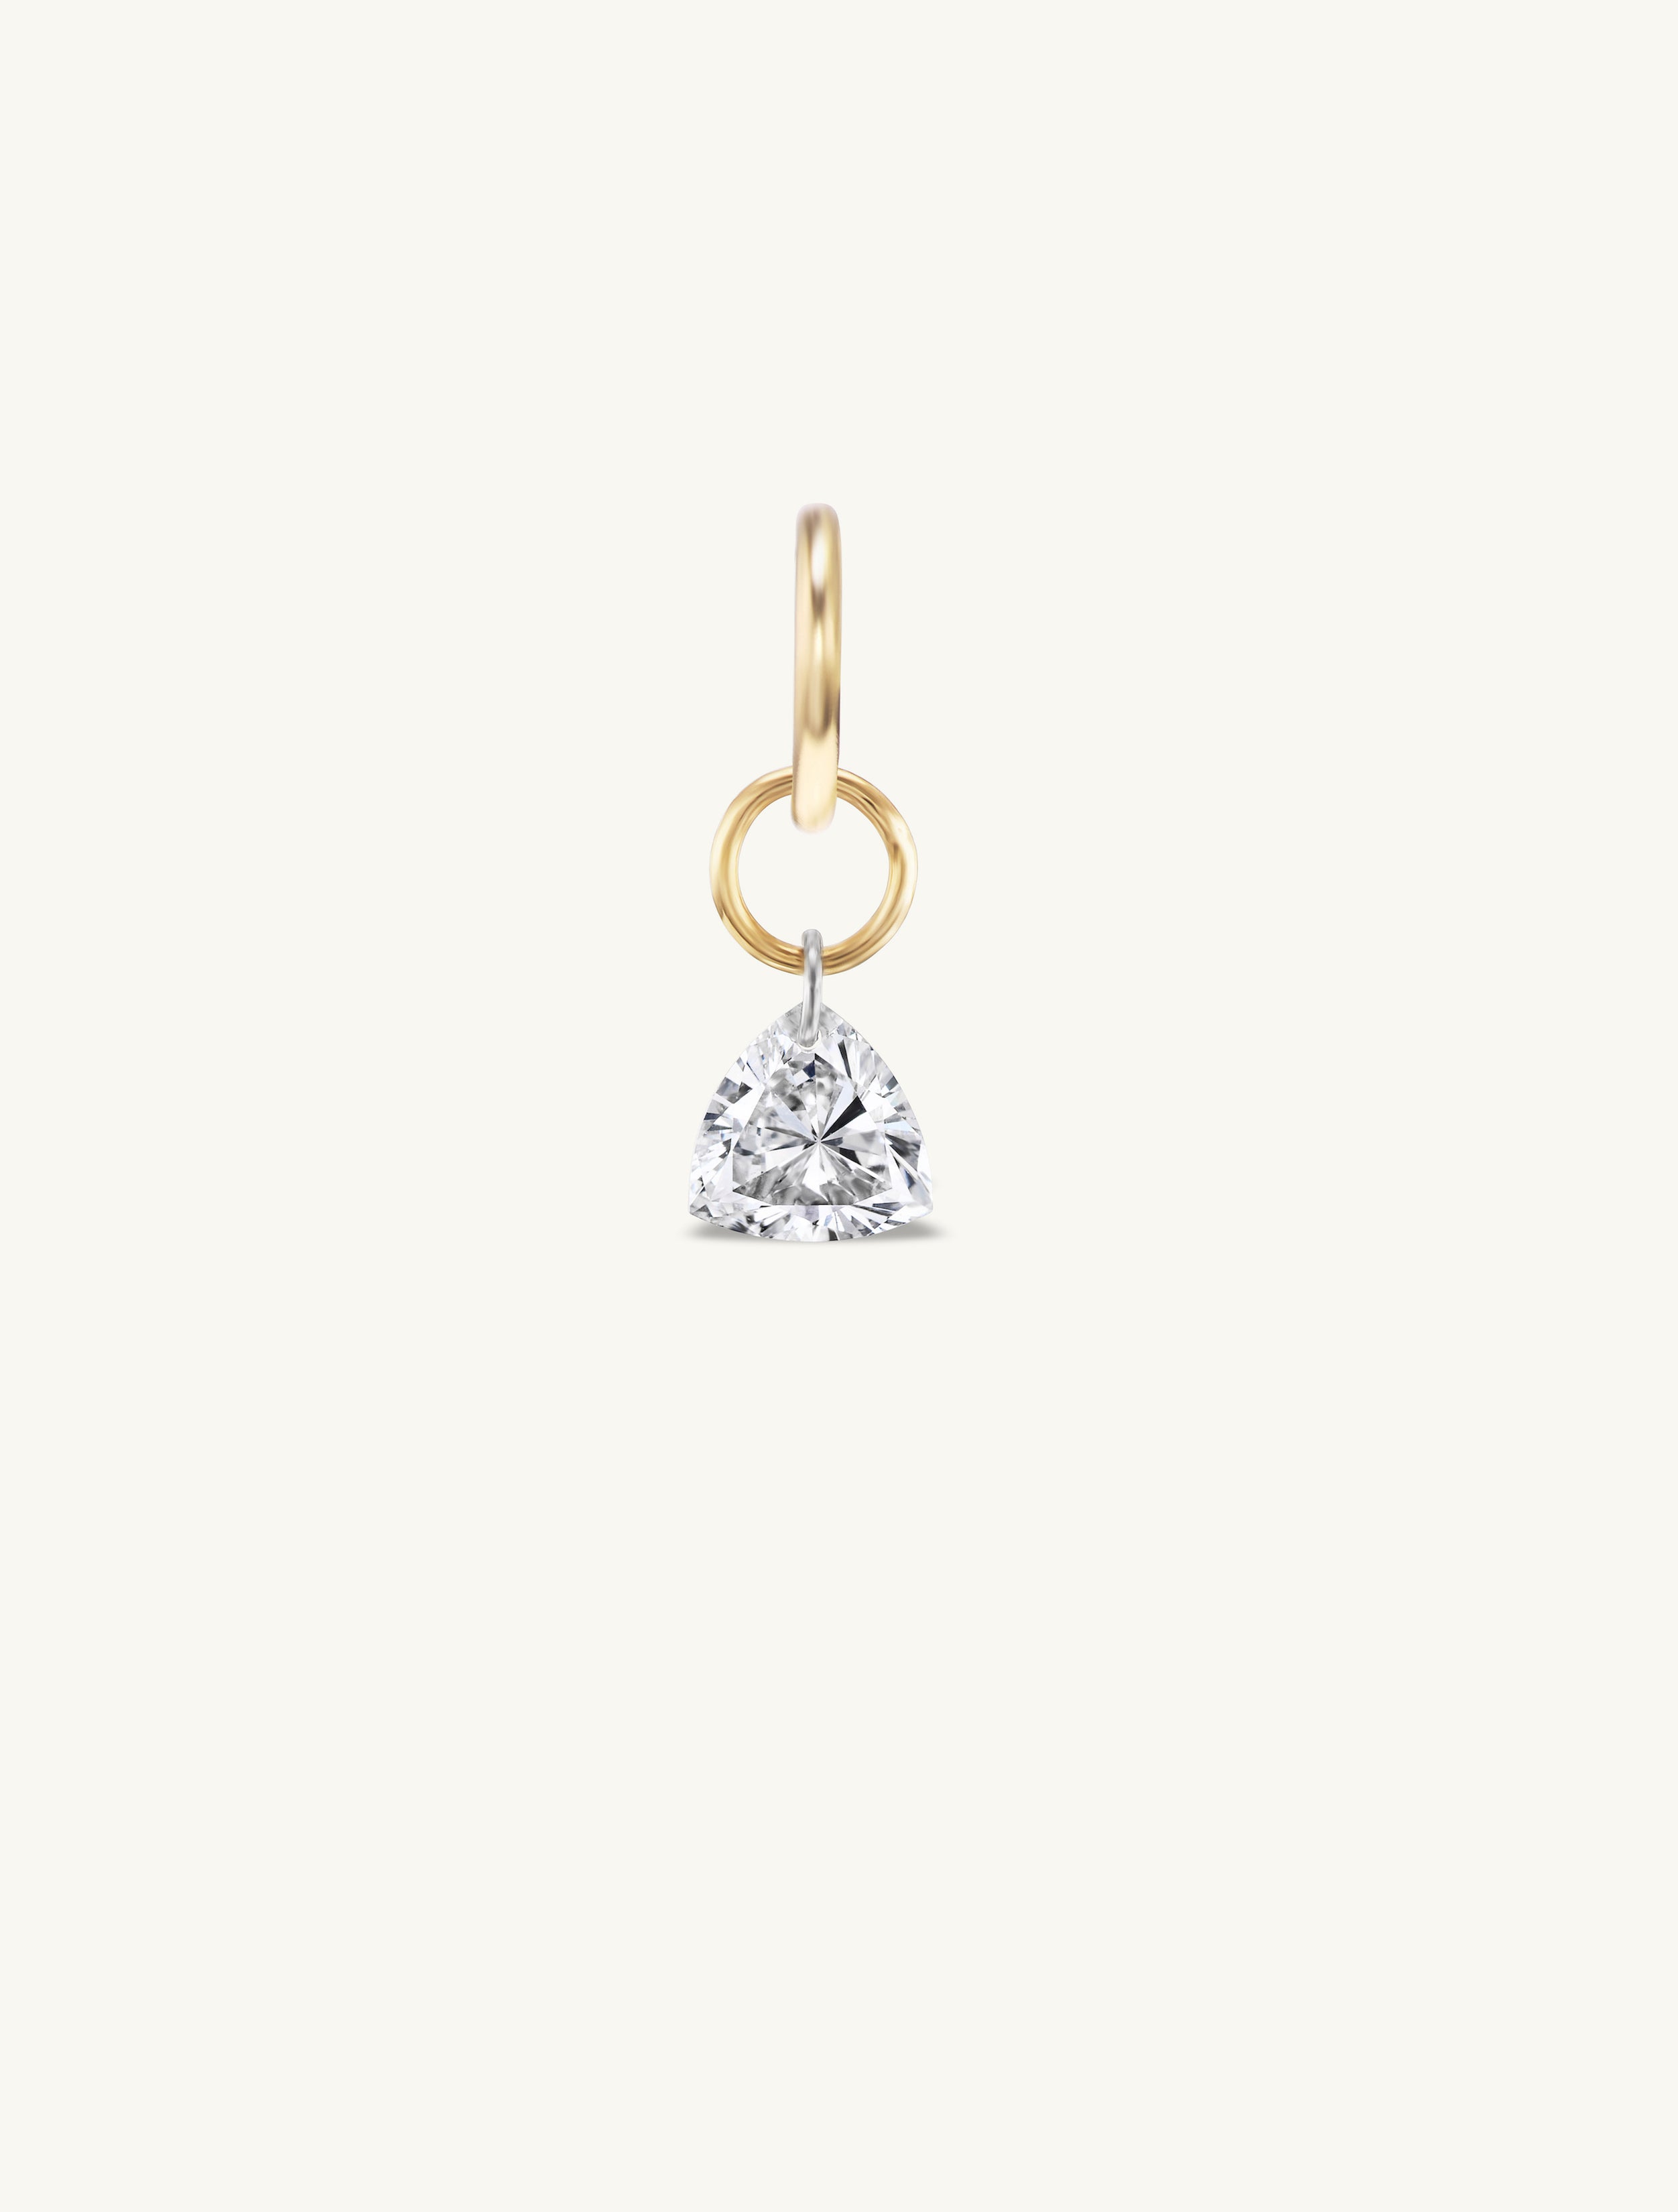 Small Trillion Pierced Diamond Charm for Chains